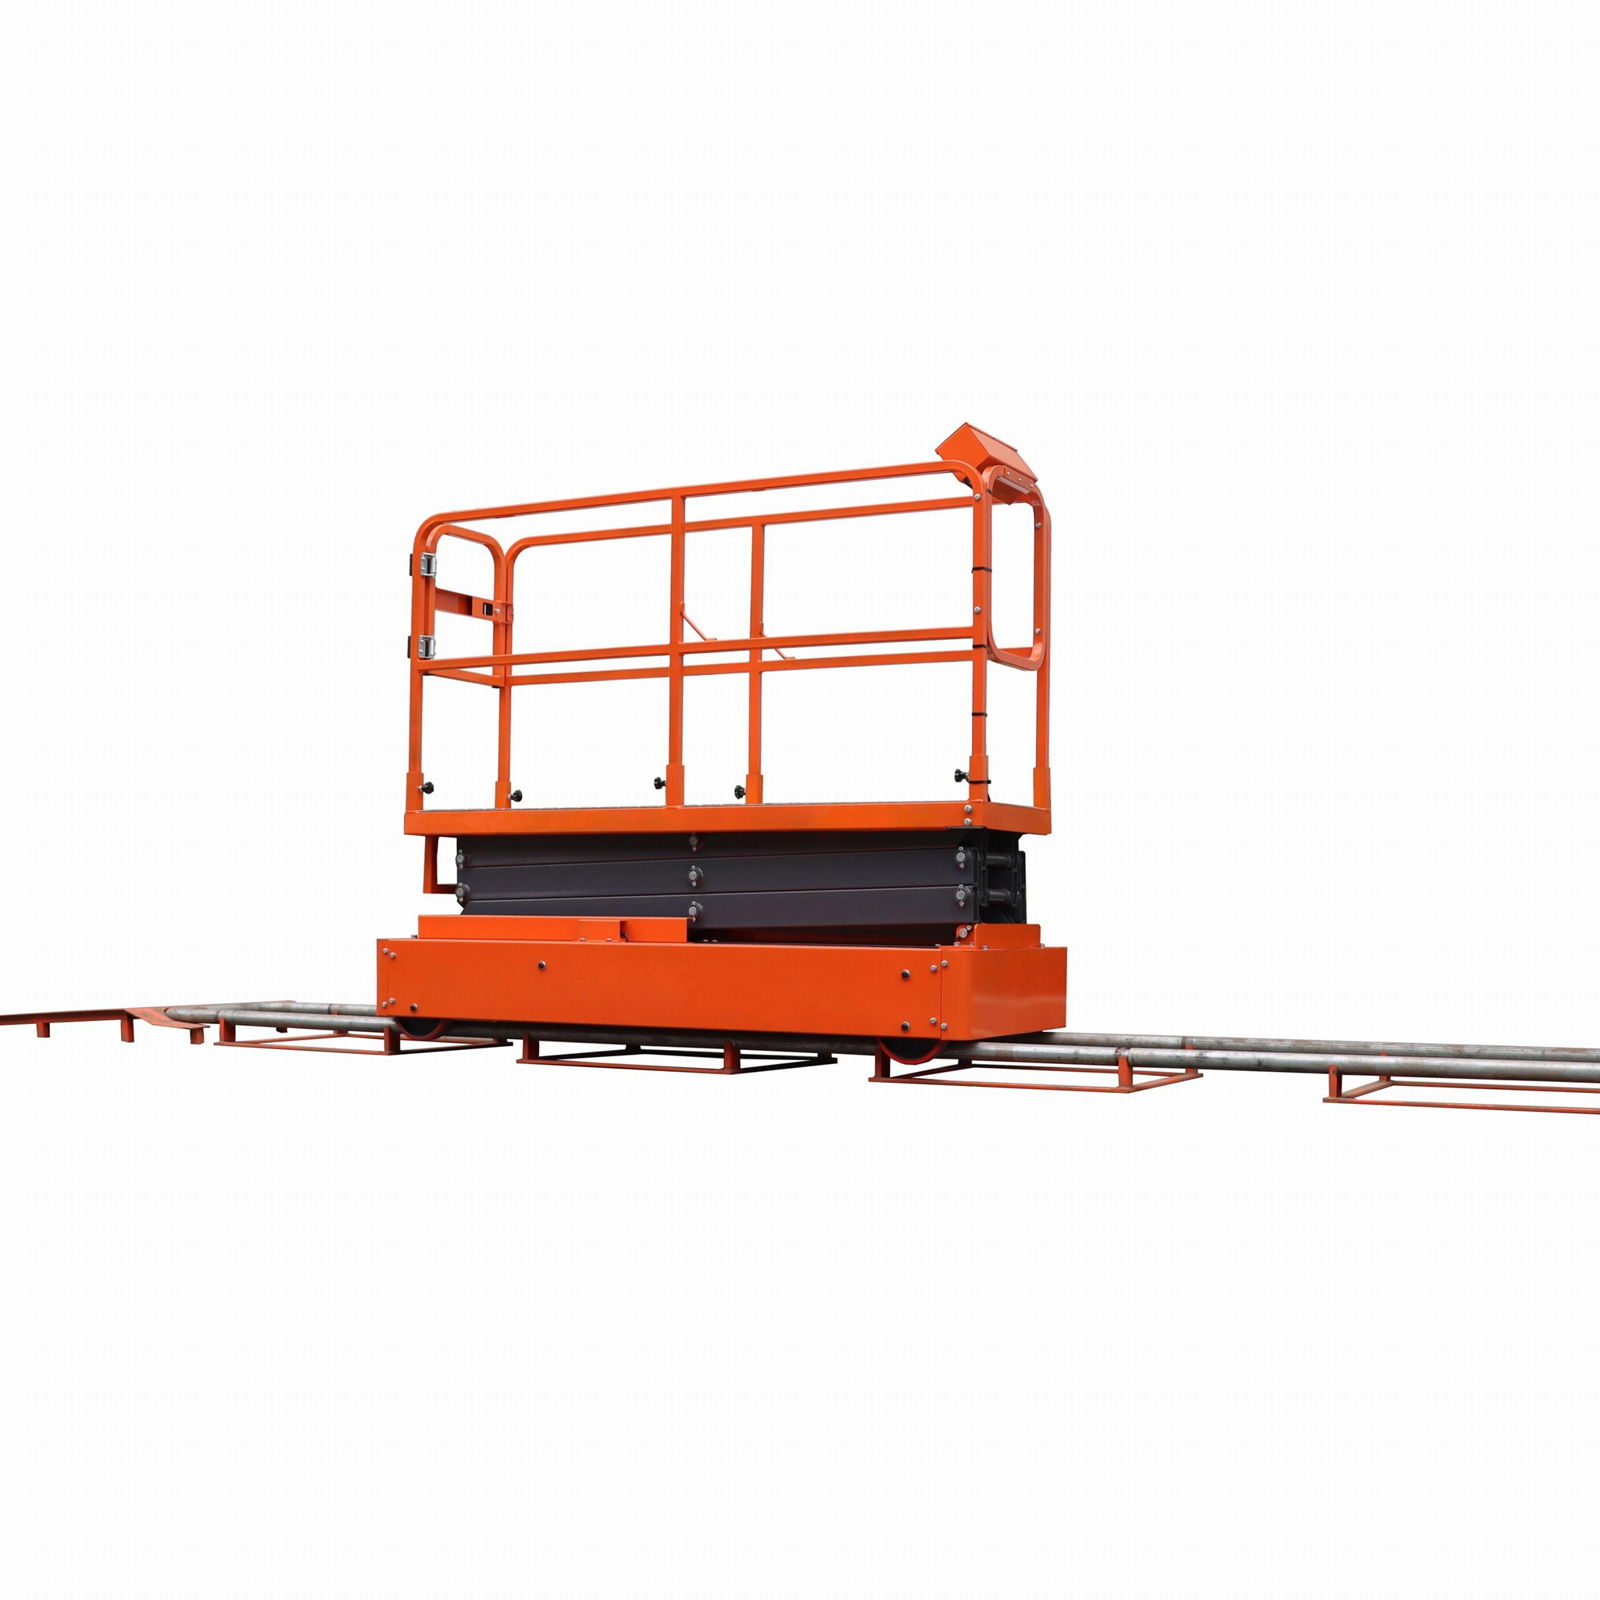 Greenhouse railway scissor lift work platform 4